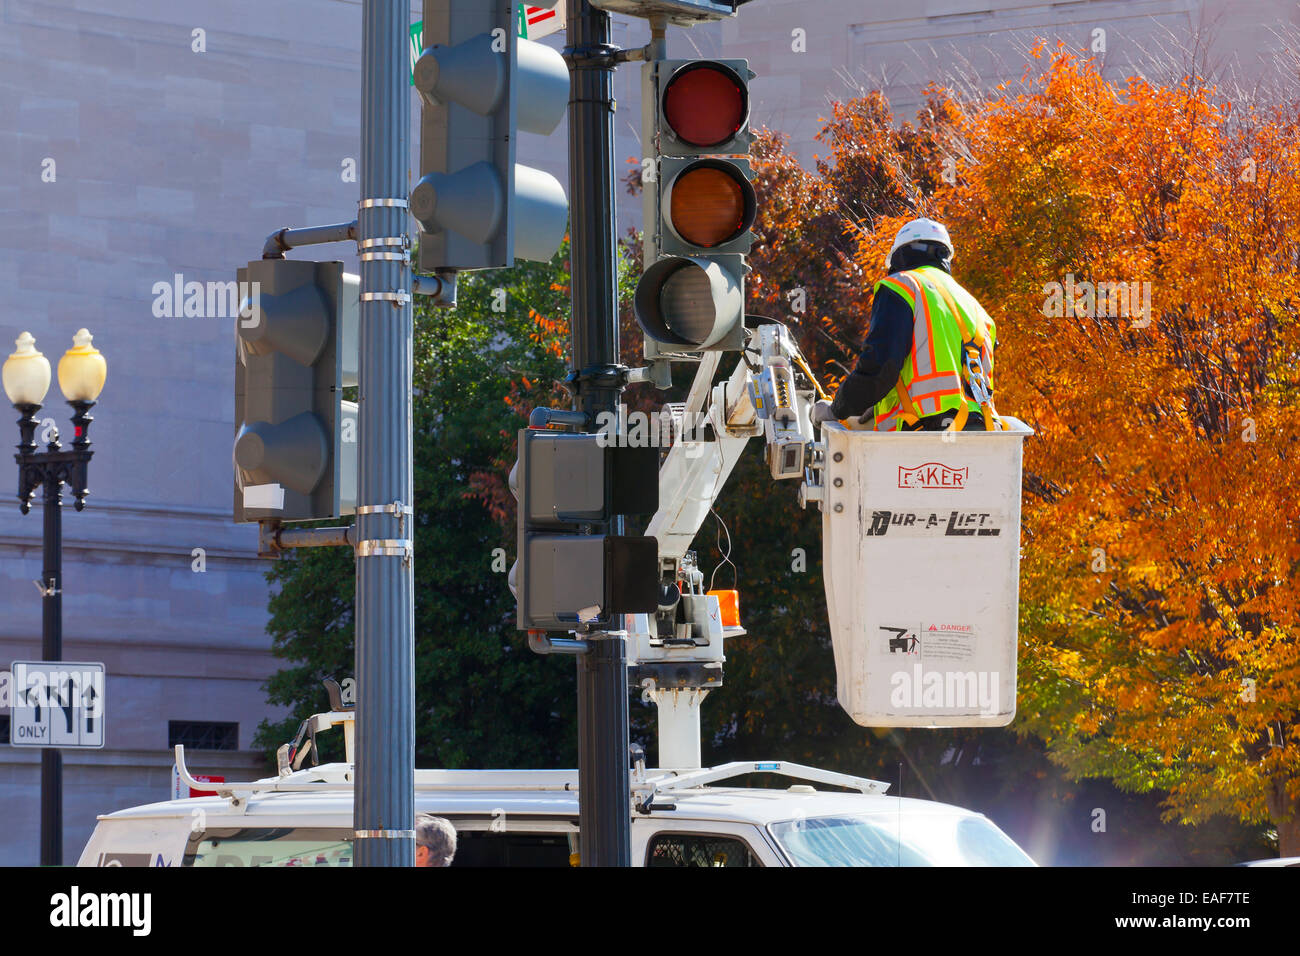 Municipal worker repairing traffic signal light - Washington, DC USA Stock Photo